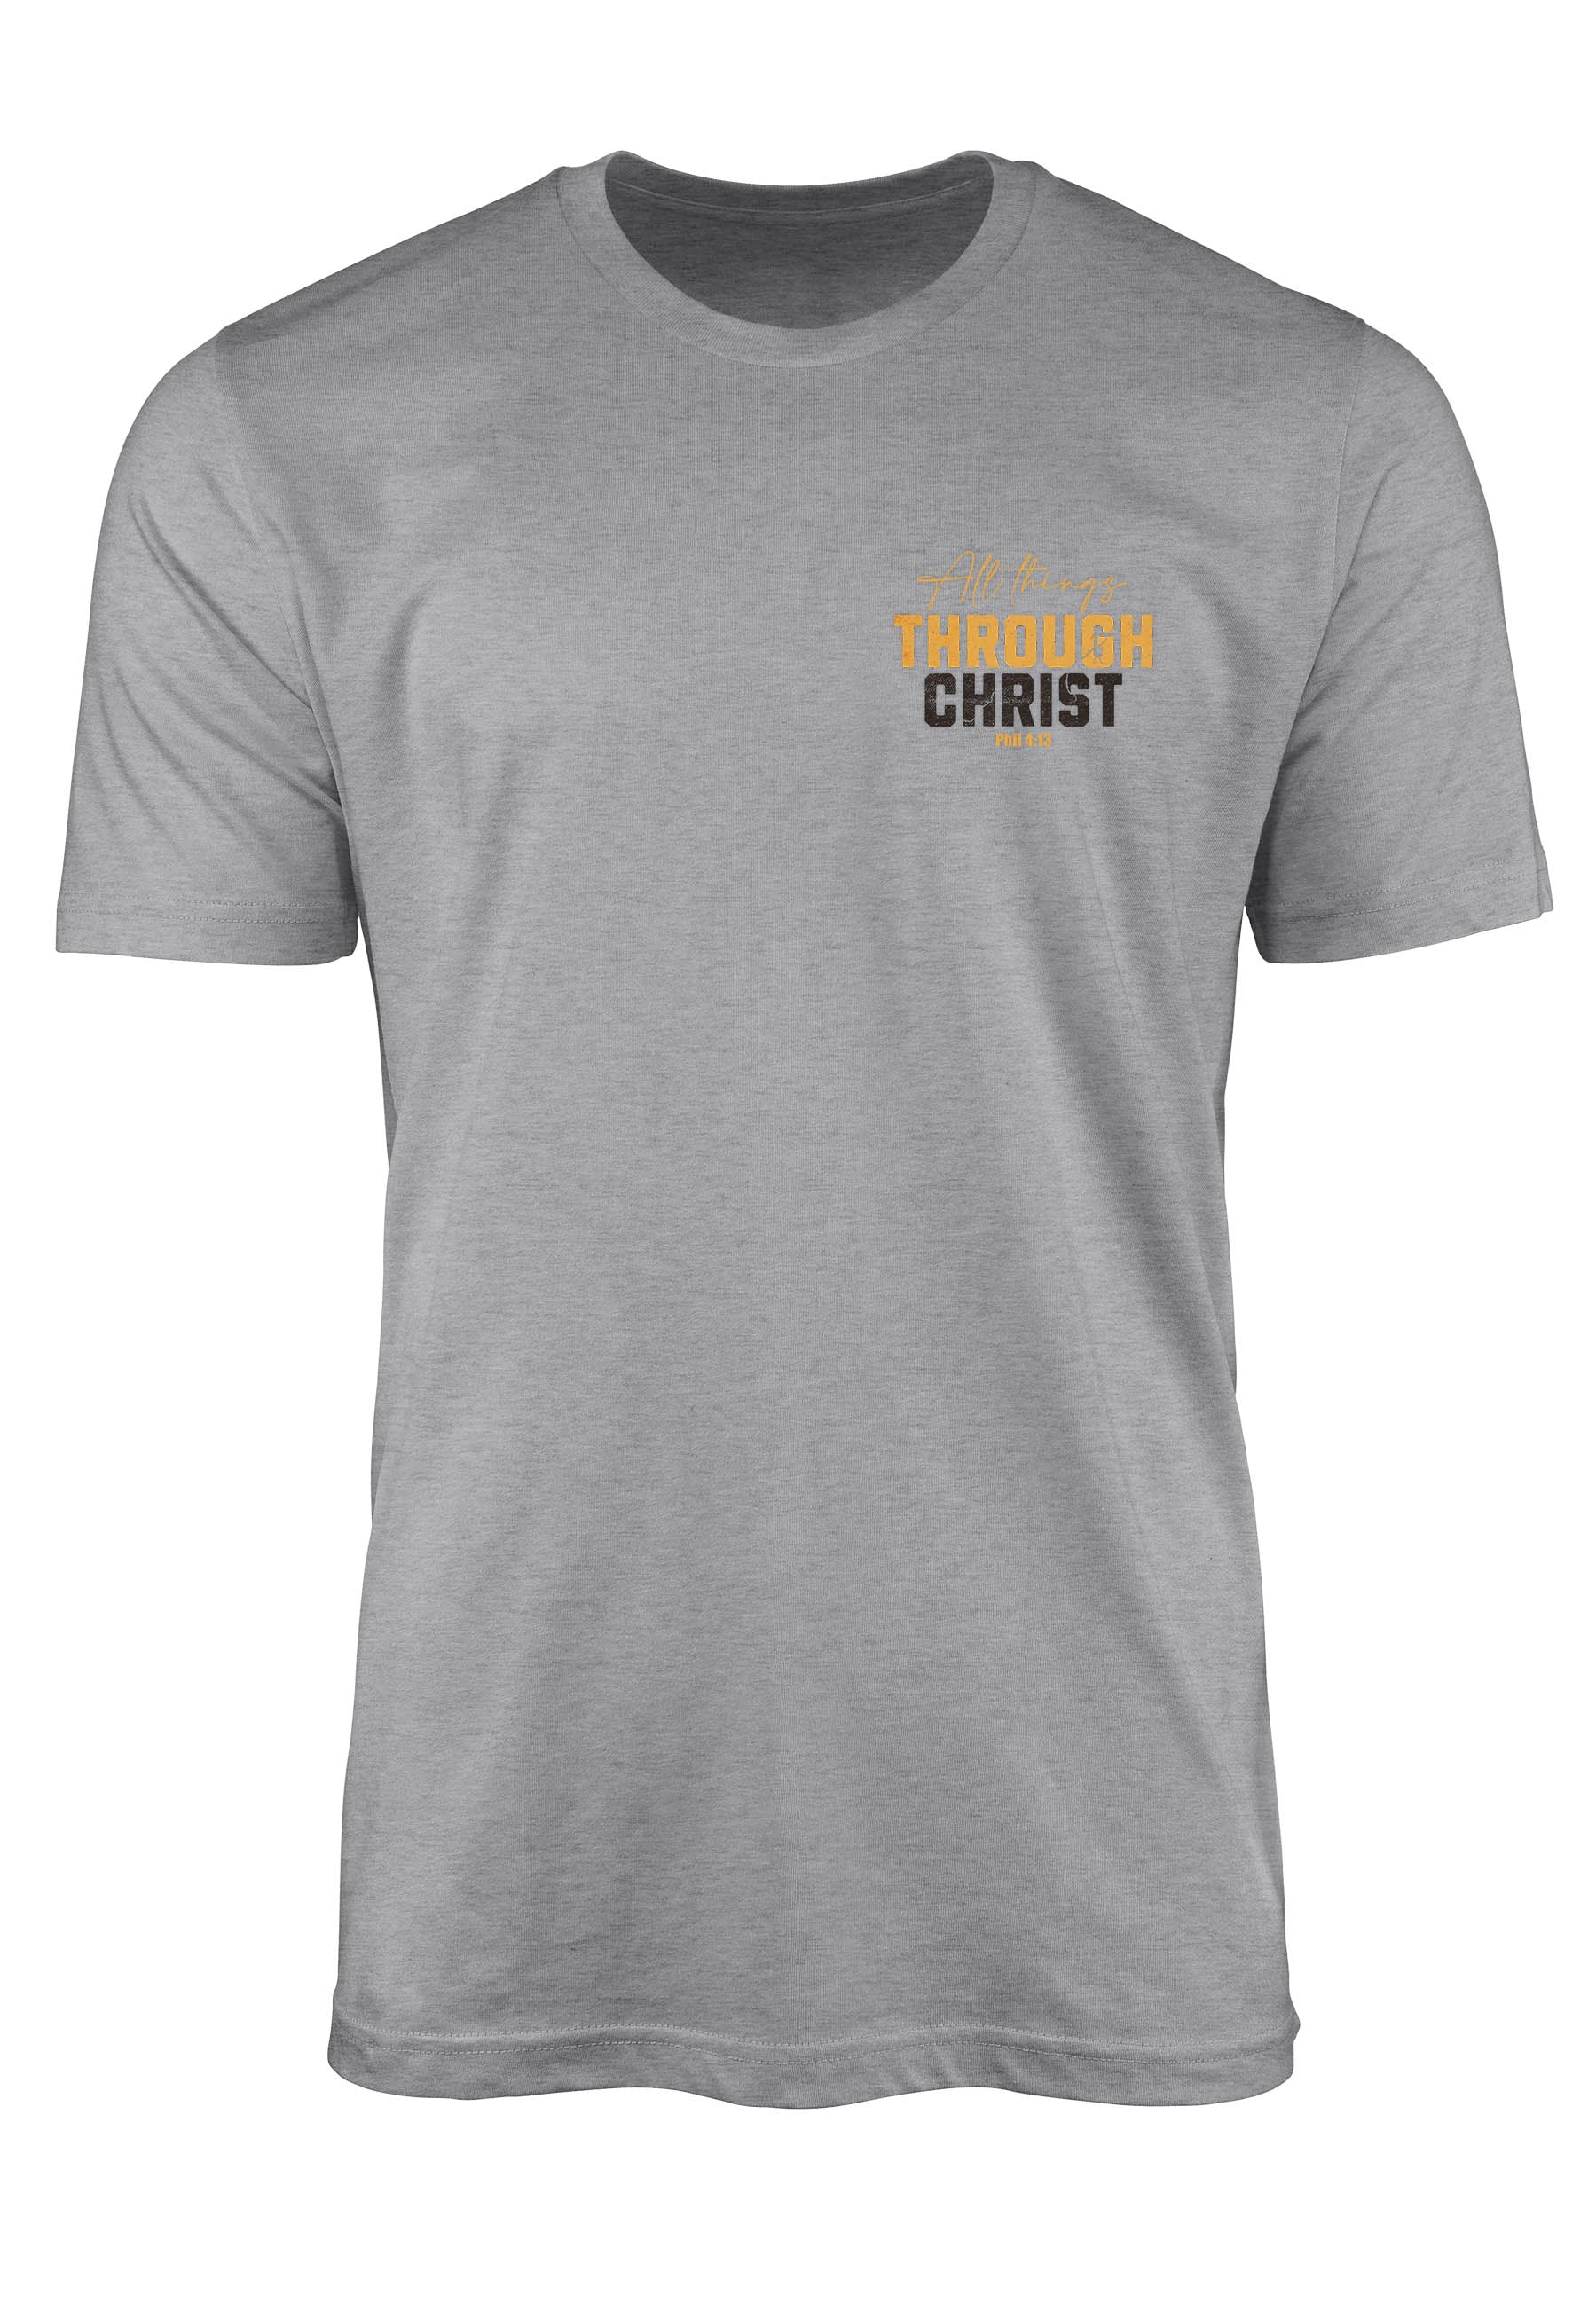 His Army® brand Christian t-shirt chest print